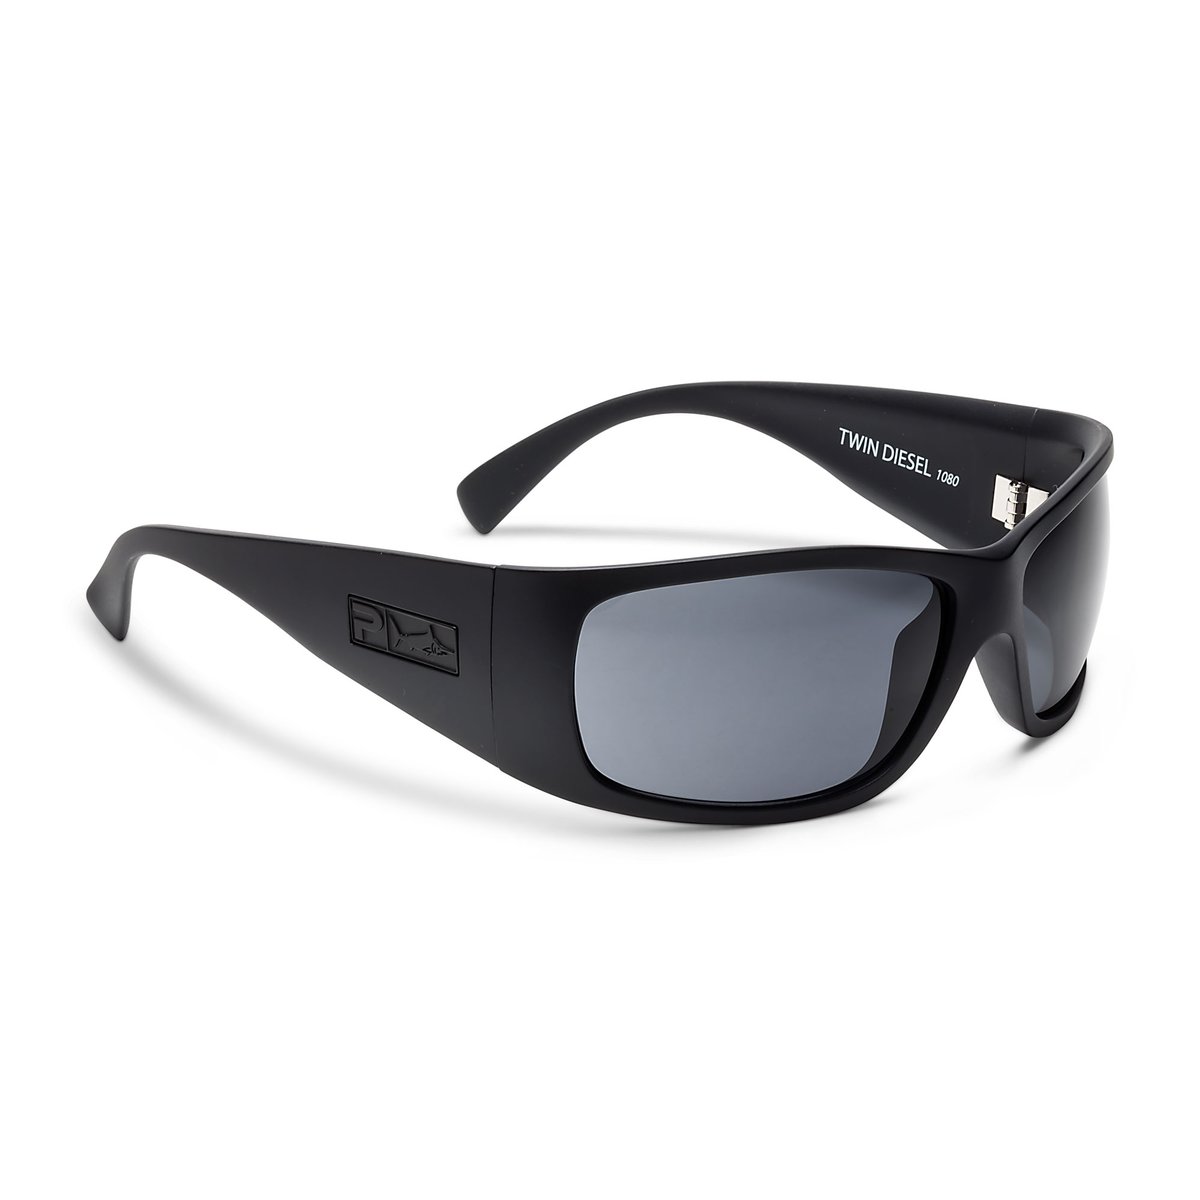 Pelagic TWIN DIESEL Sunglasses Matte Black Grey Lens